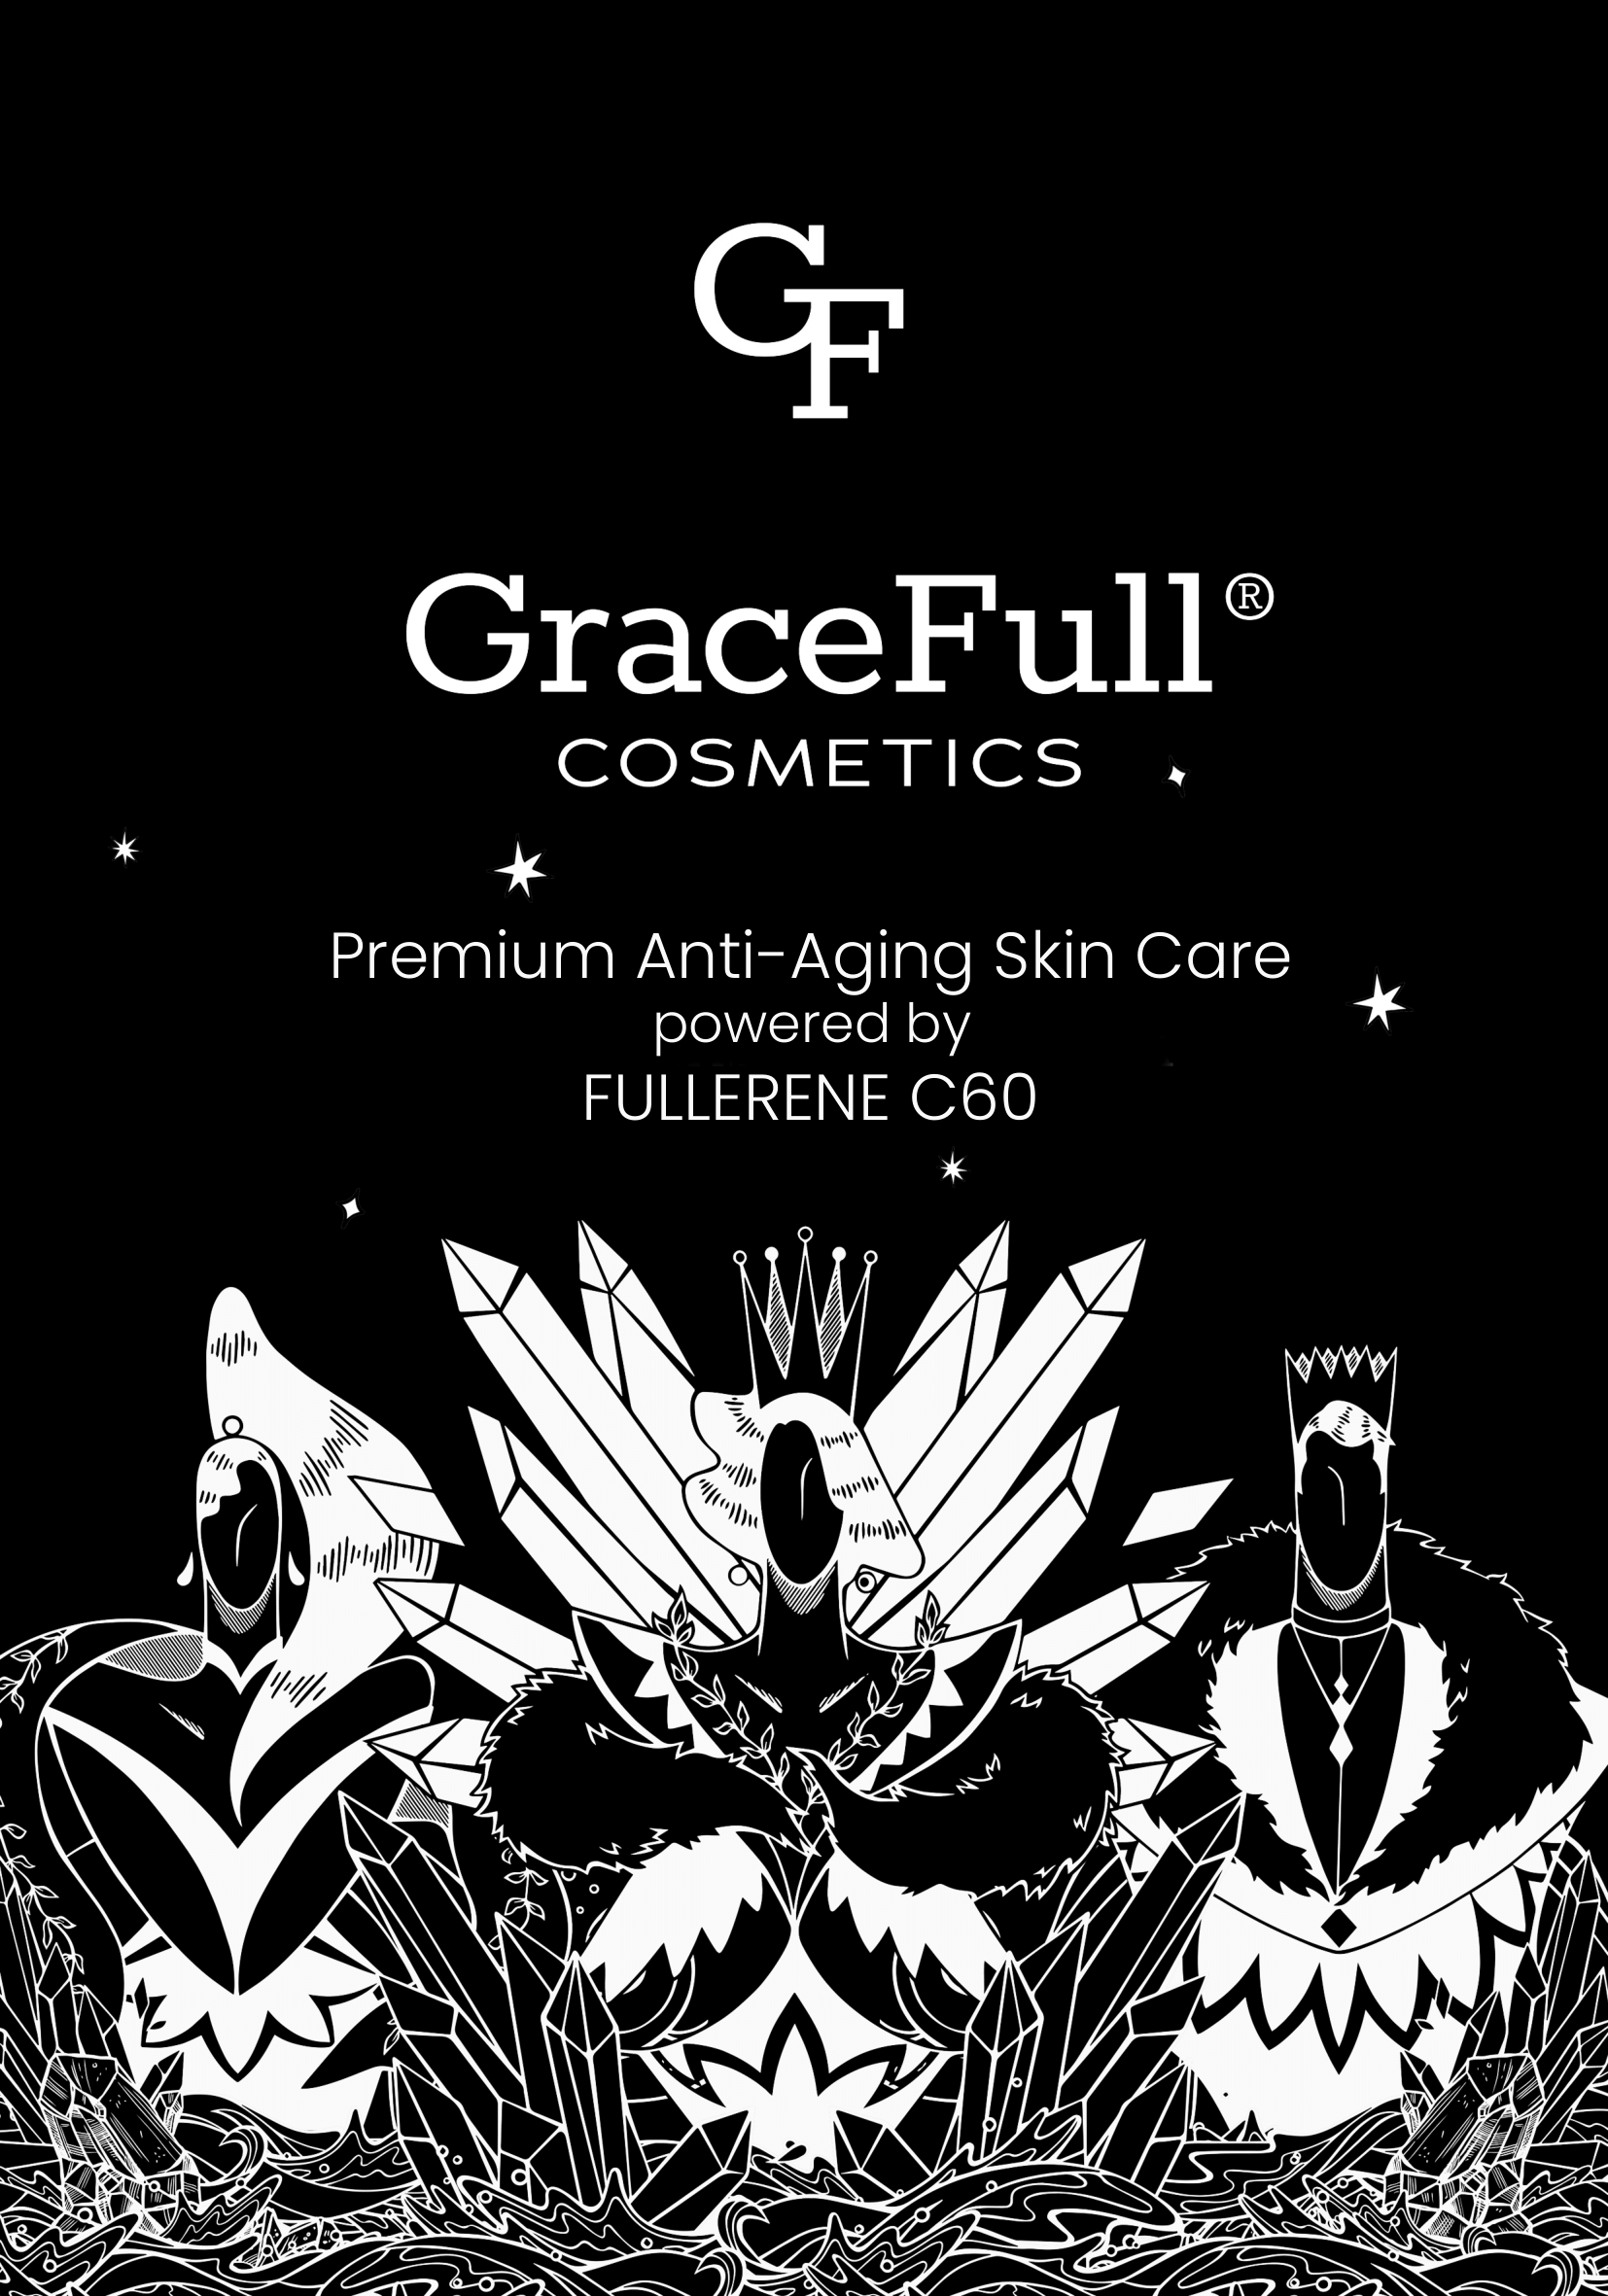 GraceFull Cosmetics-full info-1png